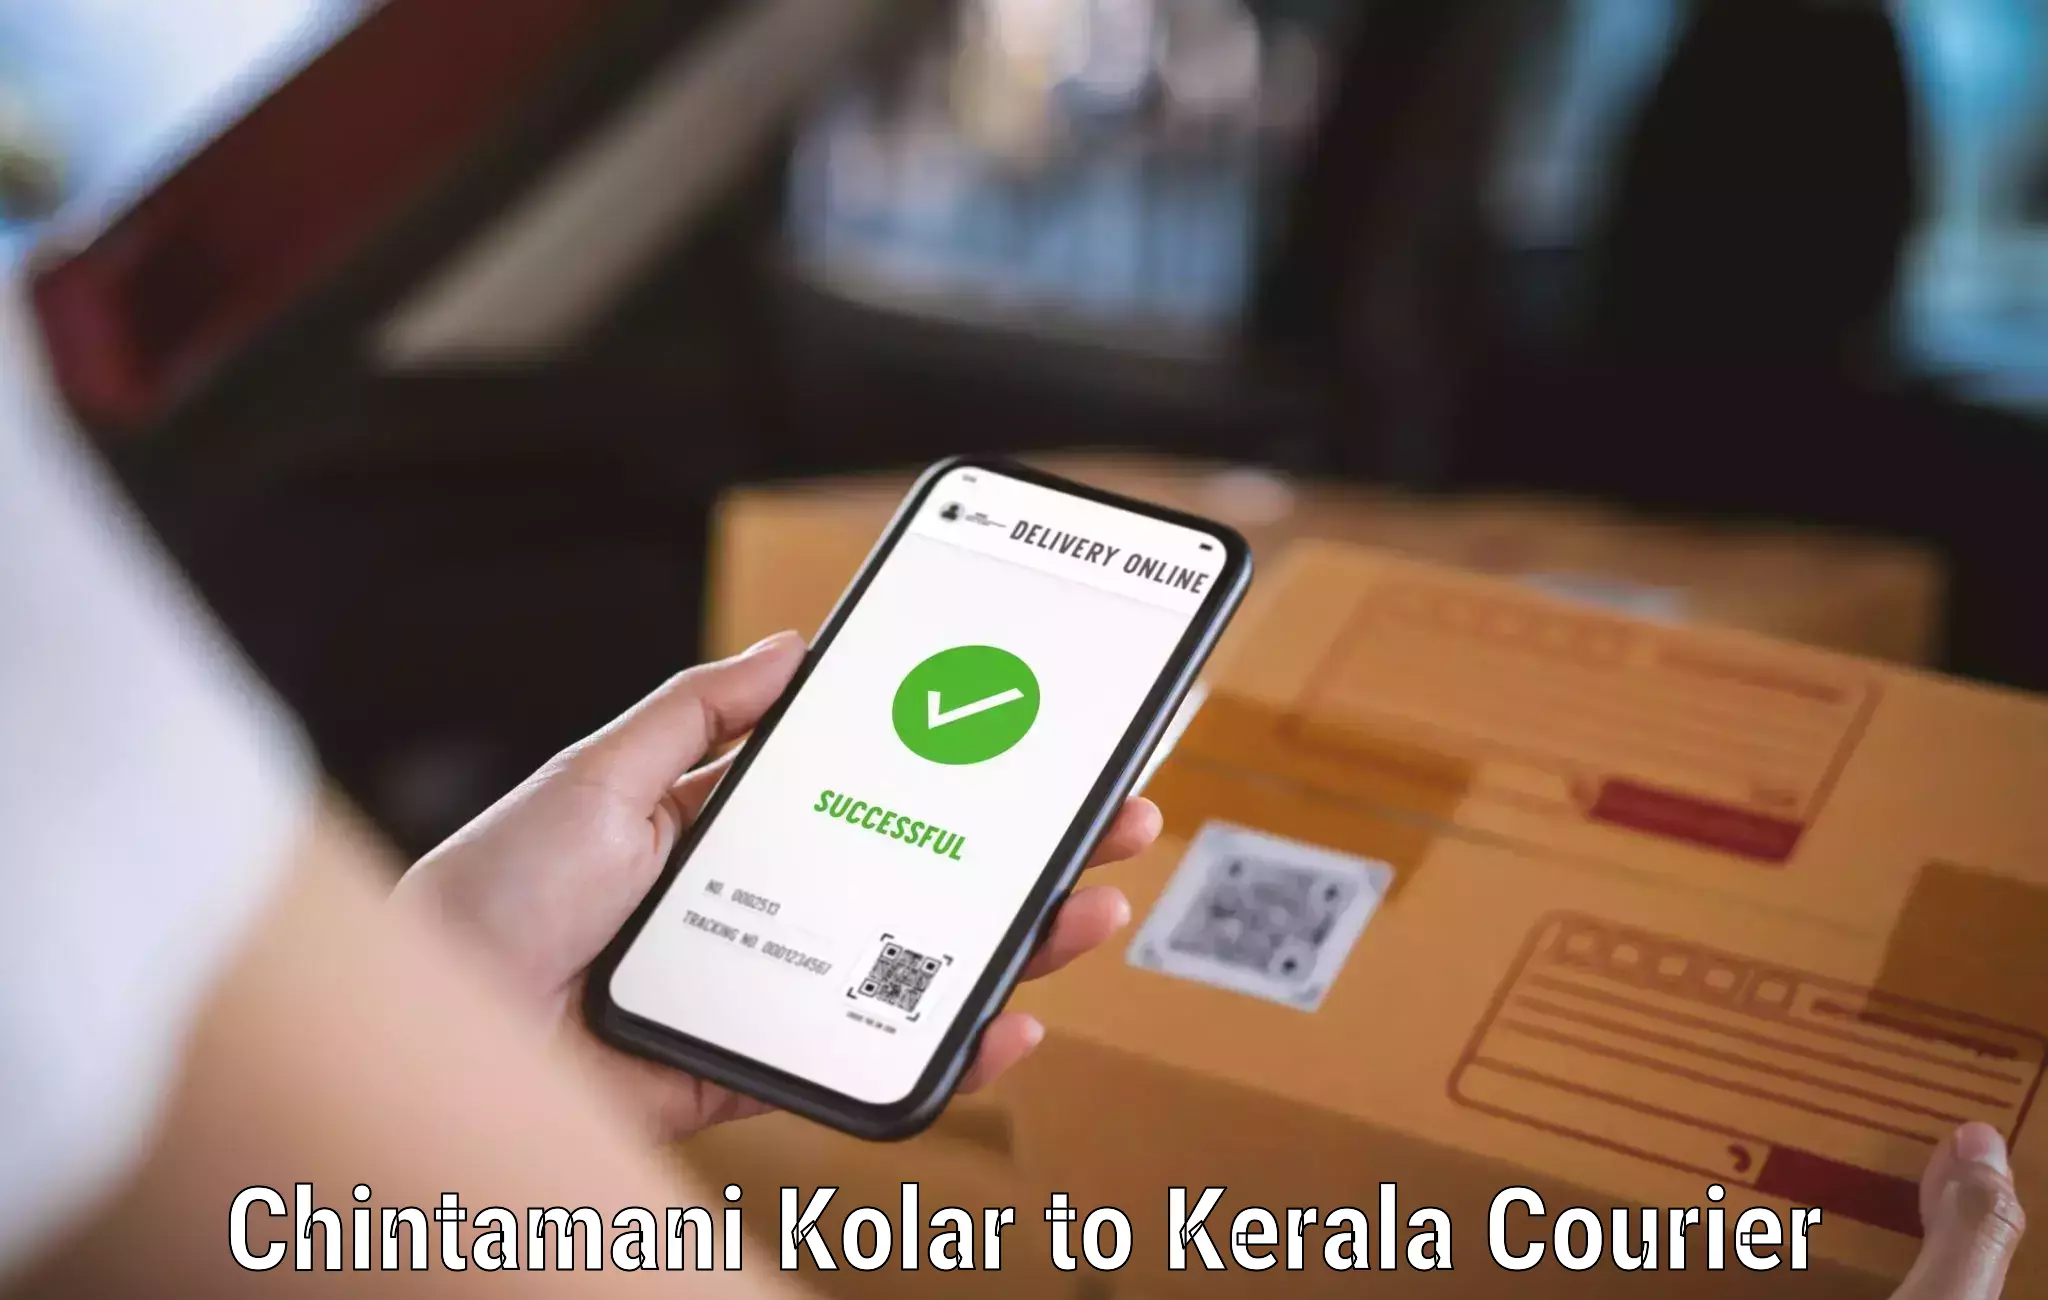 Bulk courier orders Chintamani Kolar to Cochin